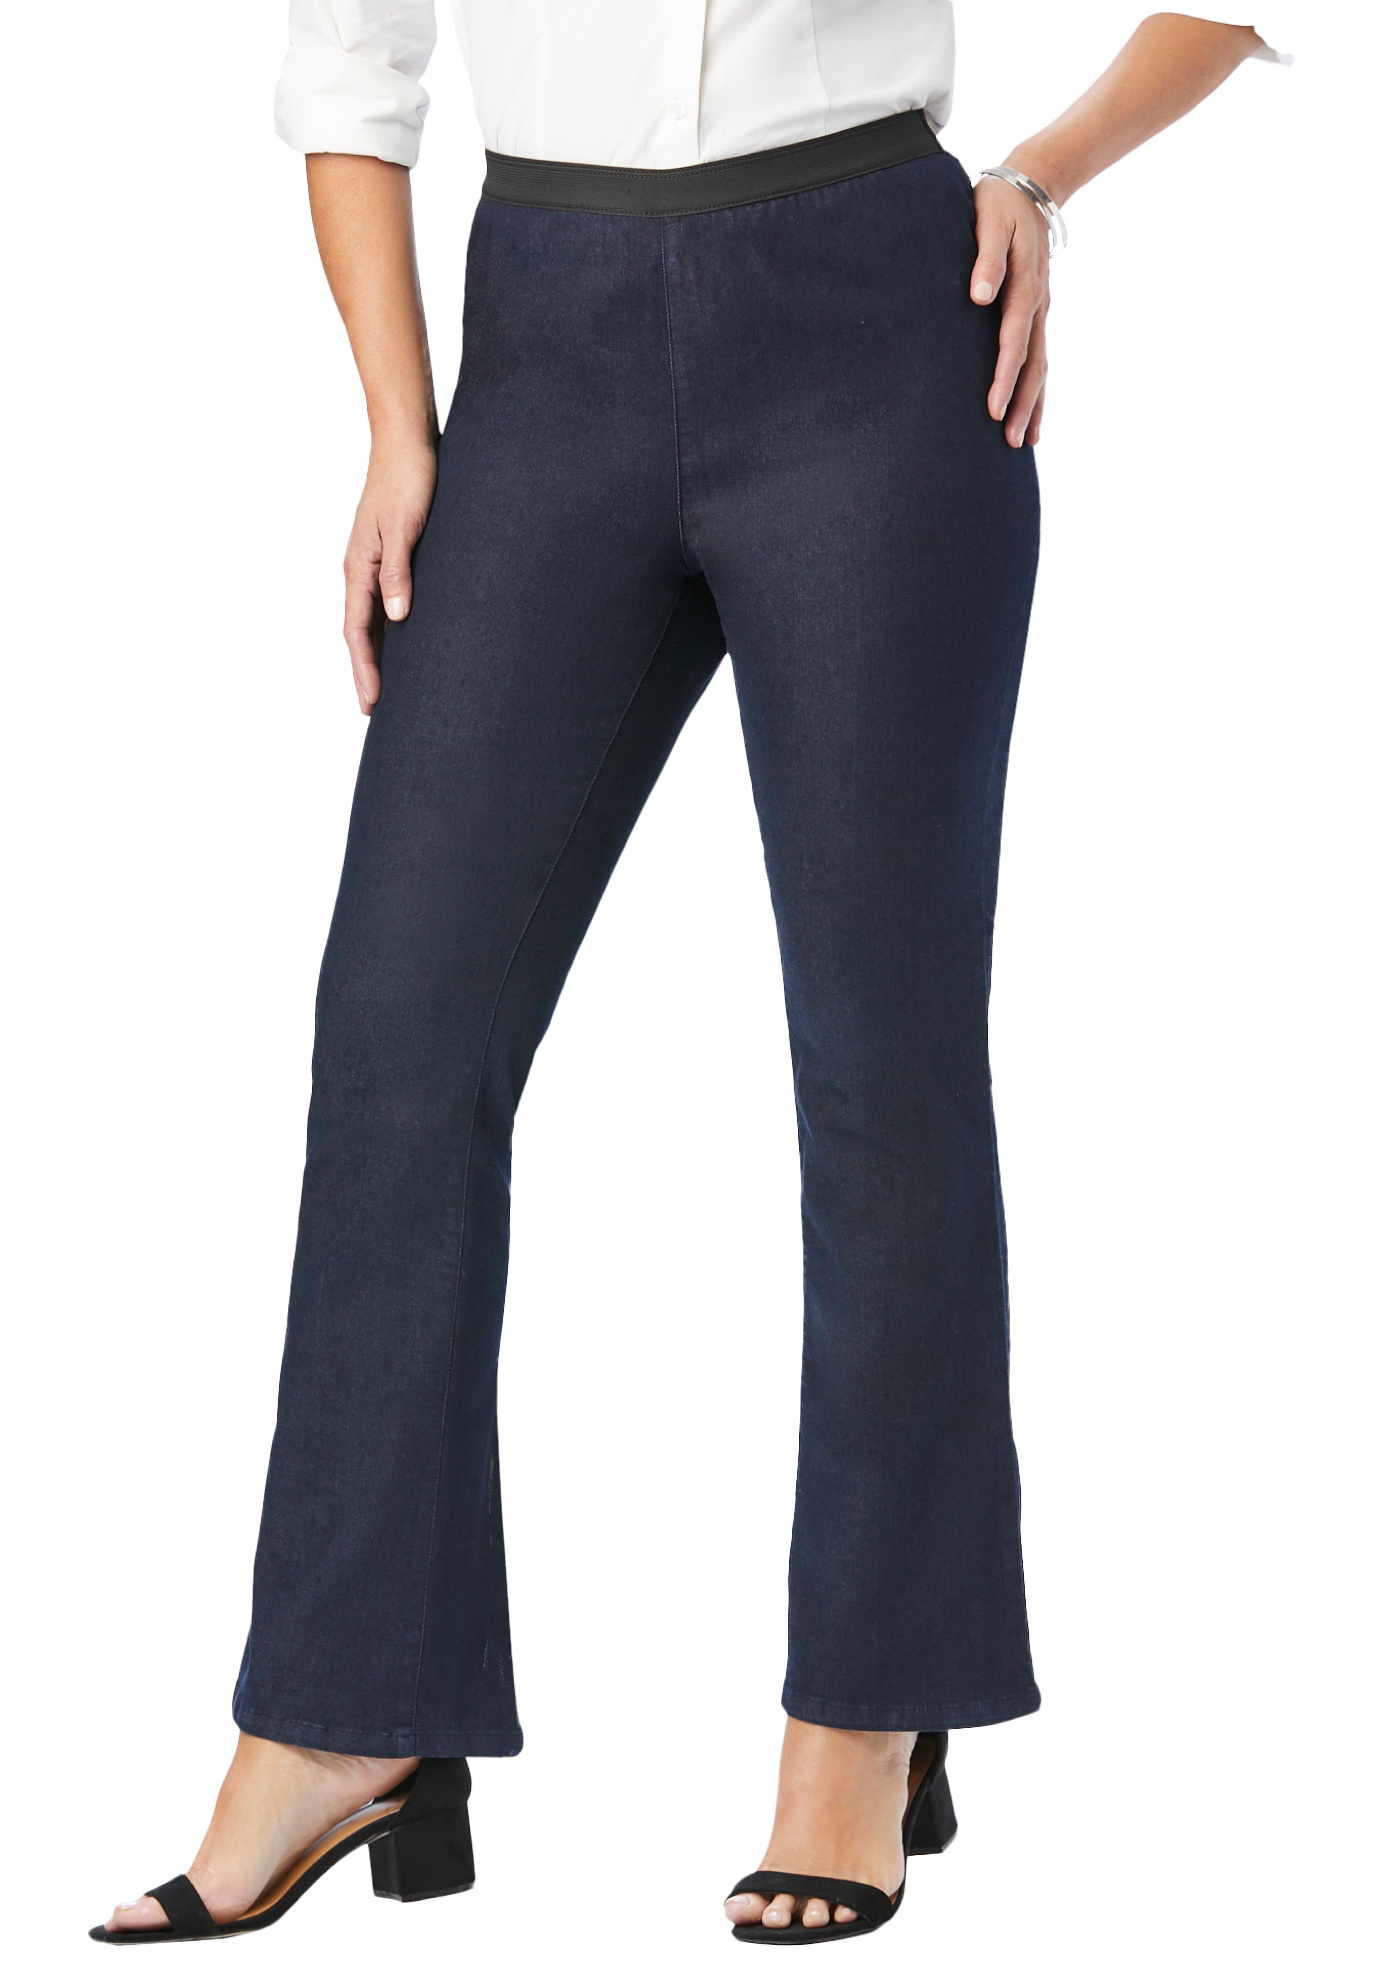 Jessica London Women's Plus Size Bootcut Stretch Jeans Elastic Waist - 16, Indigo Blue - image 1 of 6